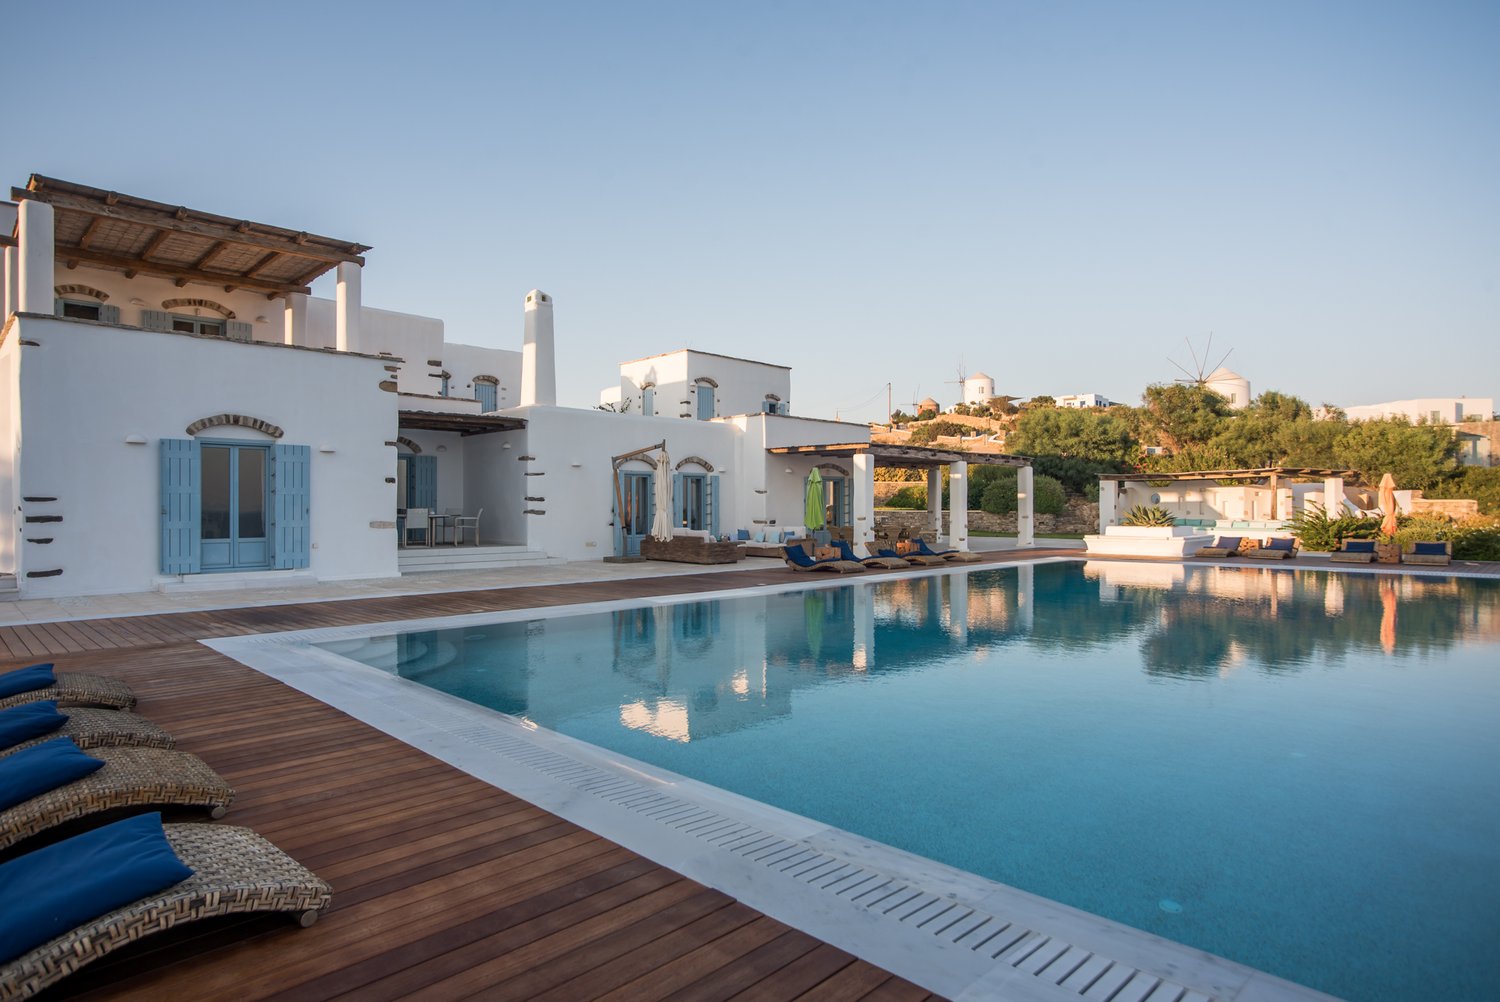 Villa apantima blue pool